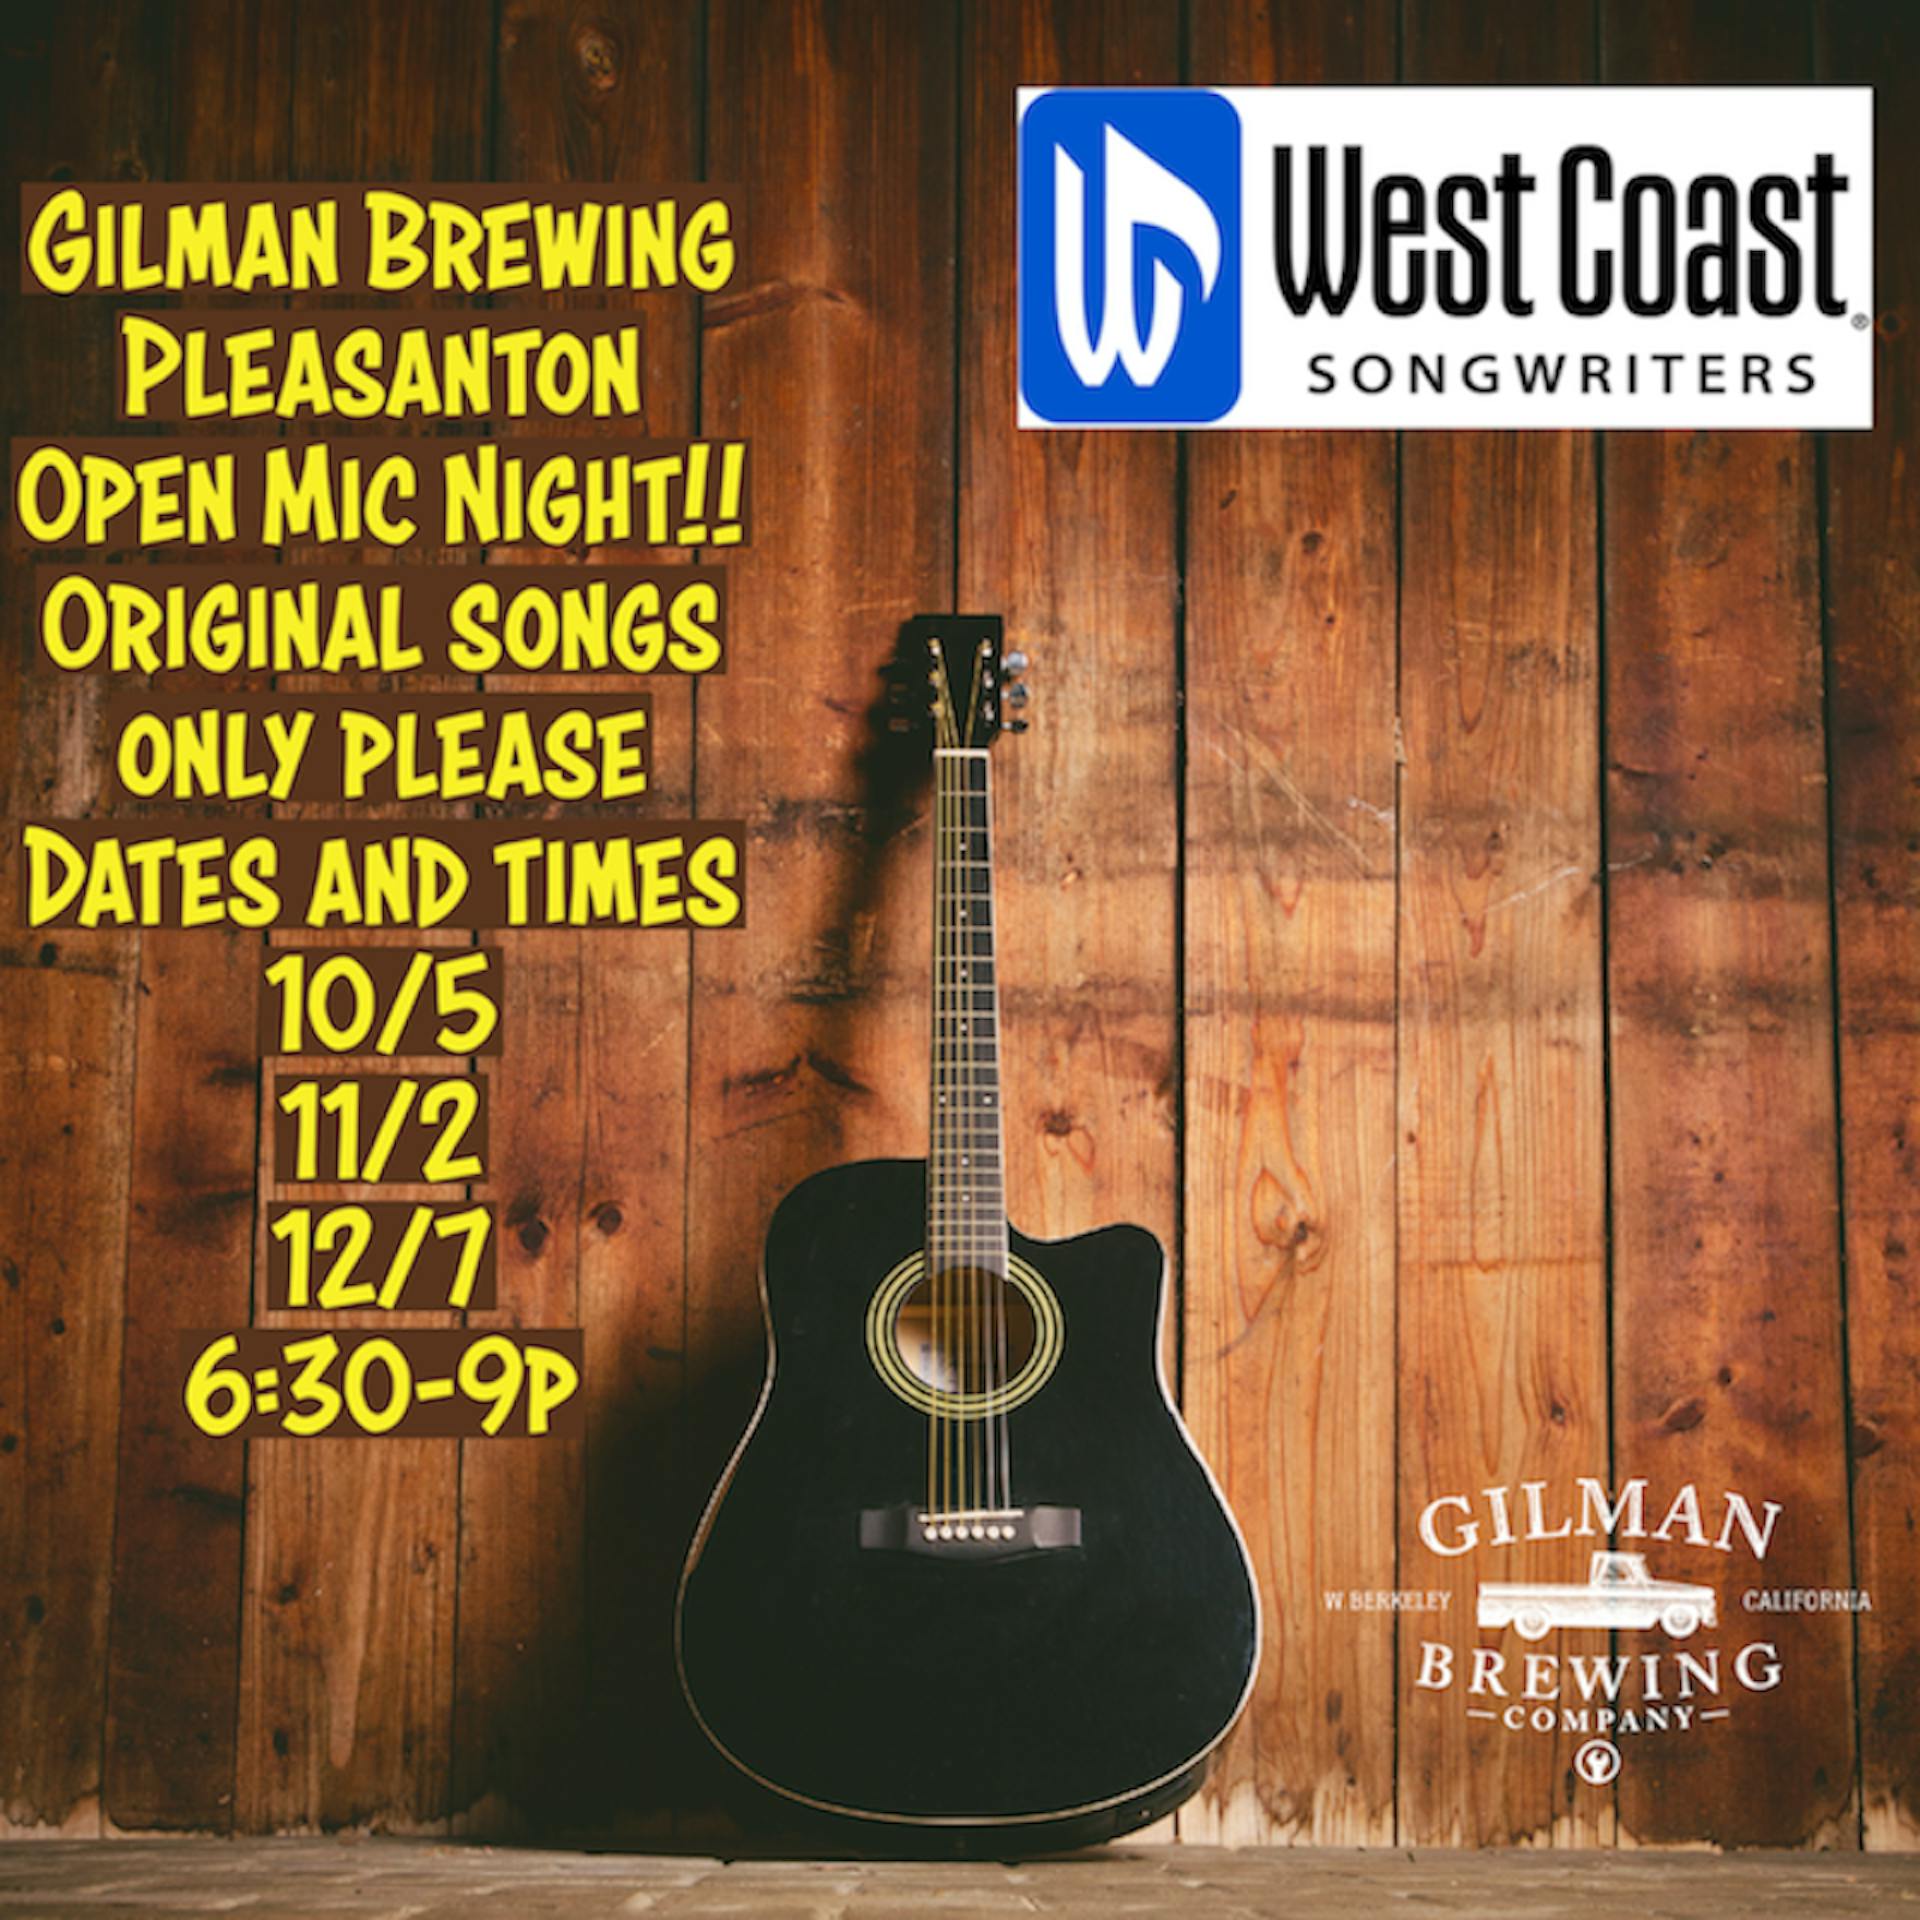 West Coast Songwriters Pleasanton